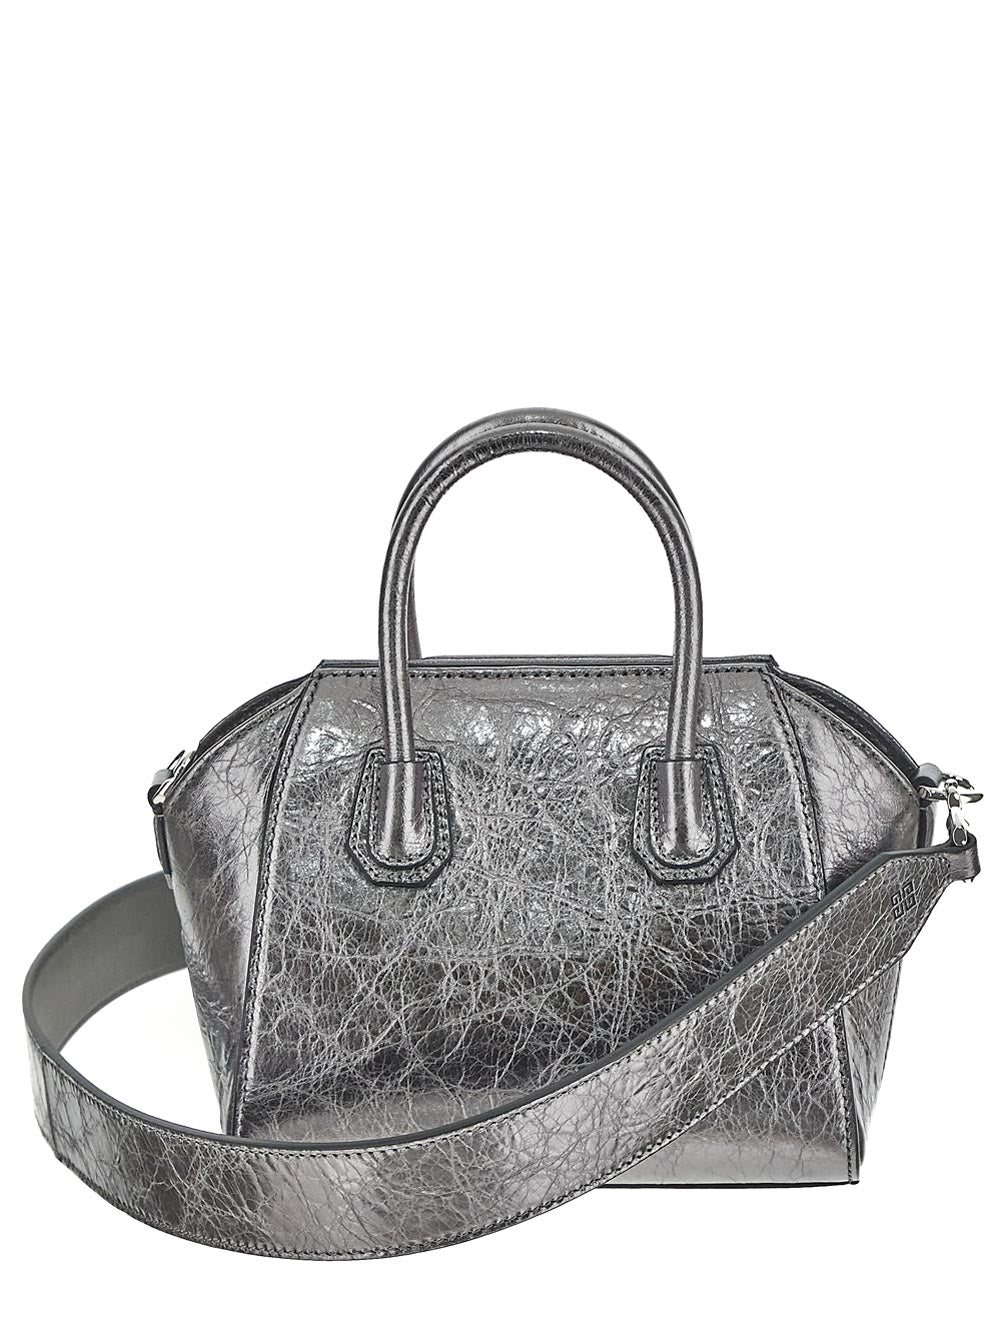 Givenchy Antigona Toy Bag In Satin With Strass